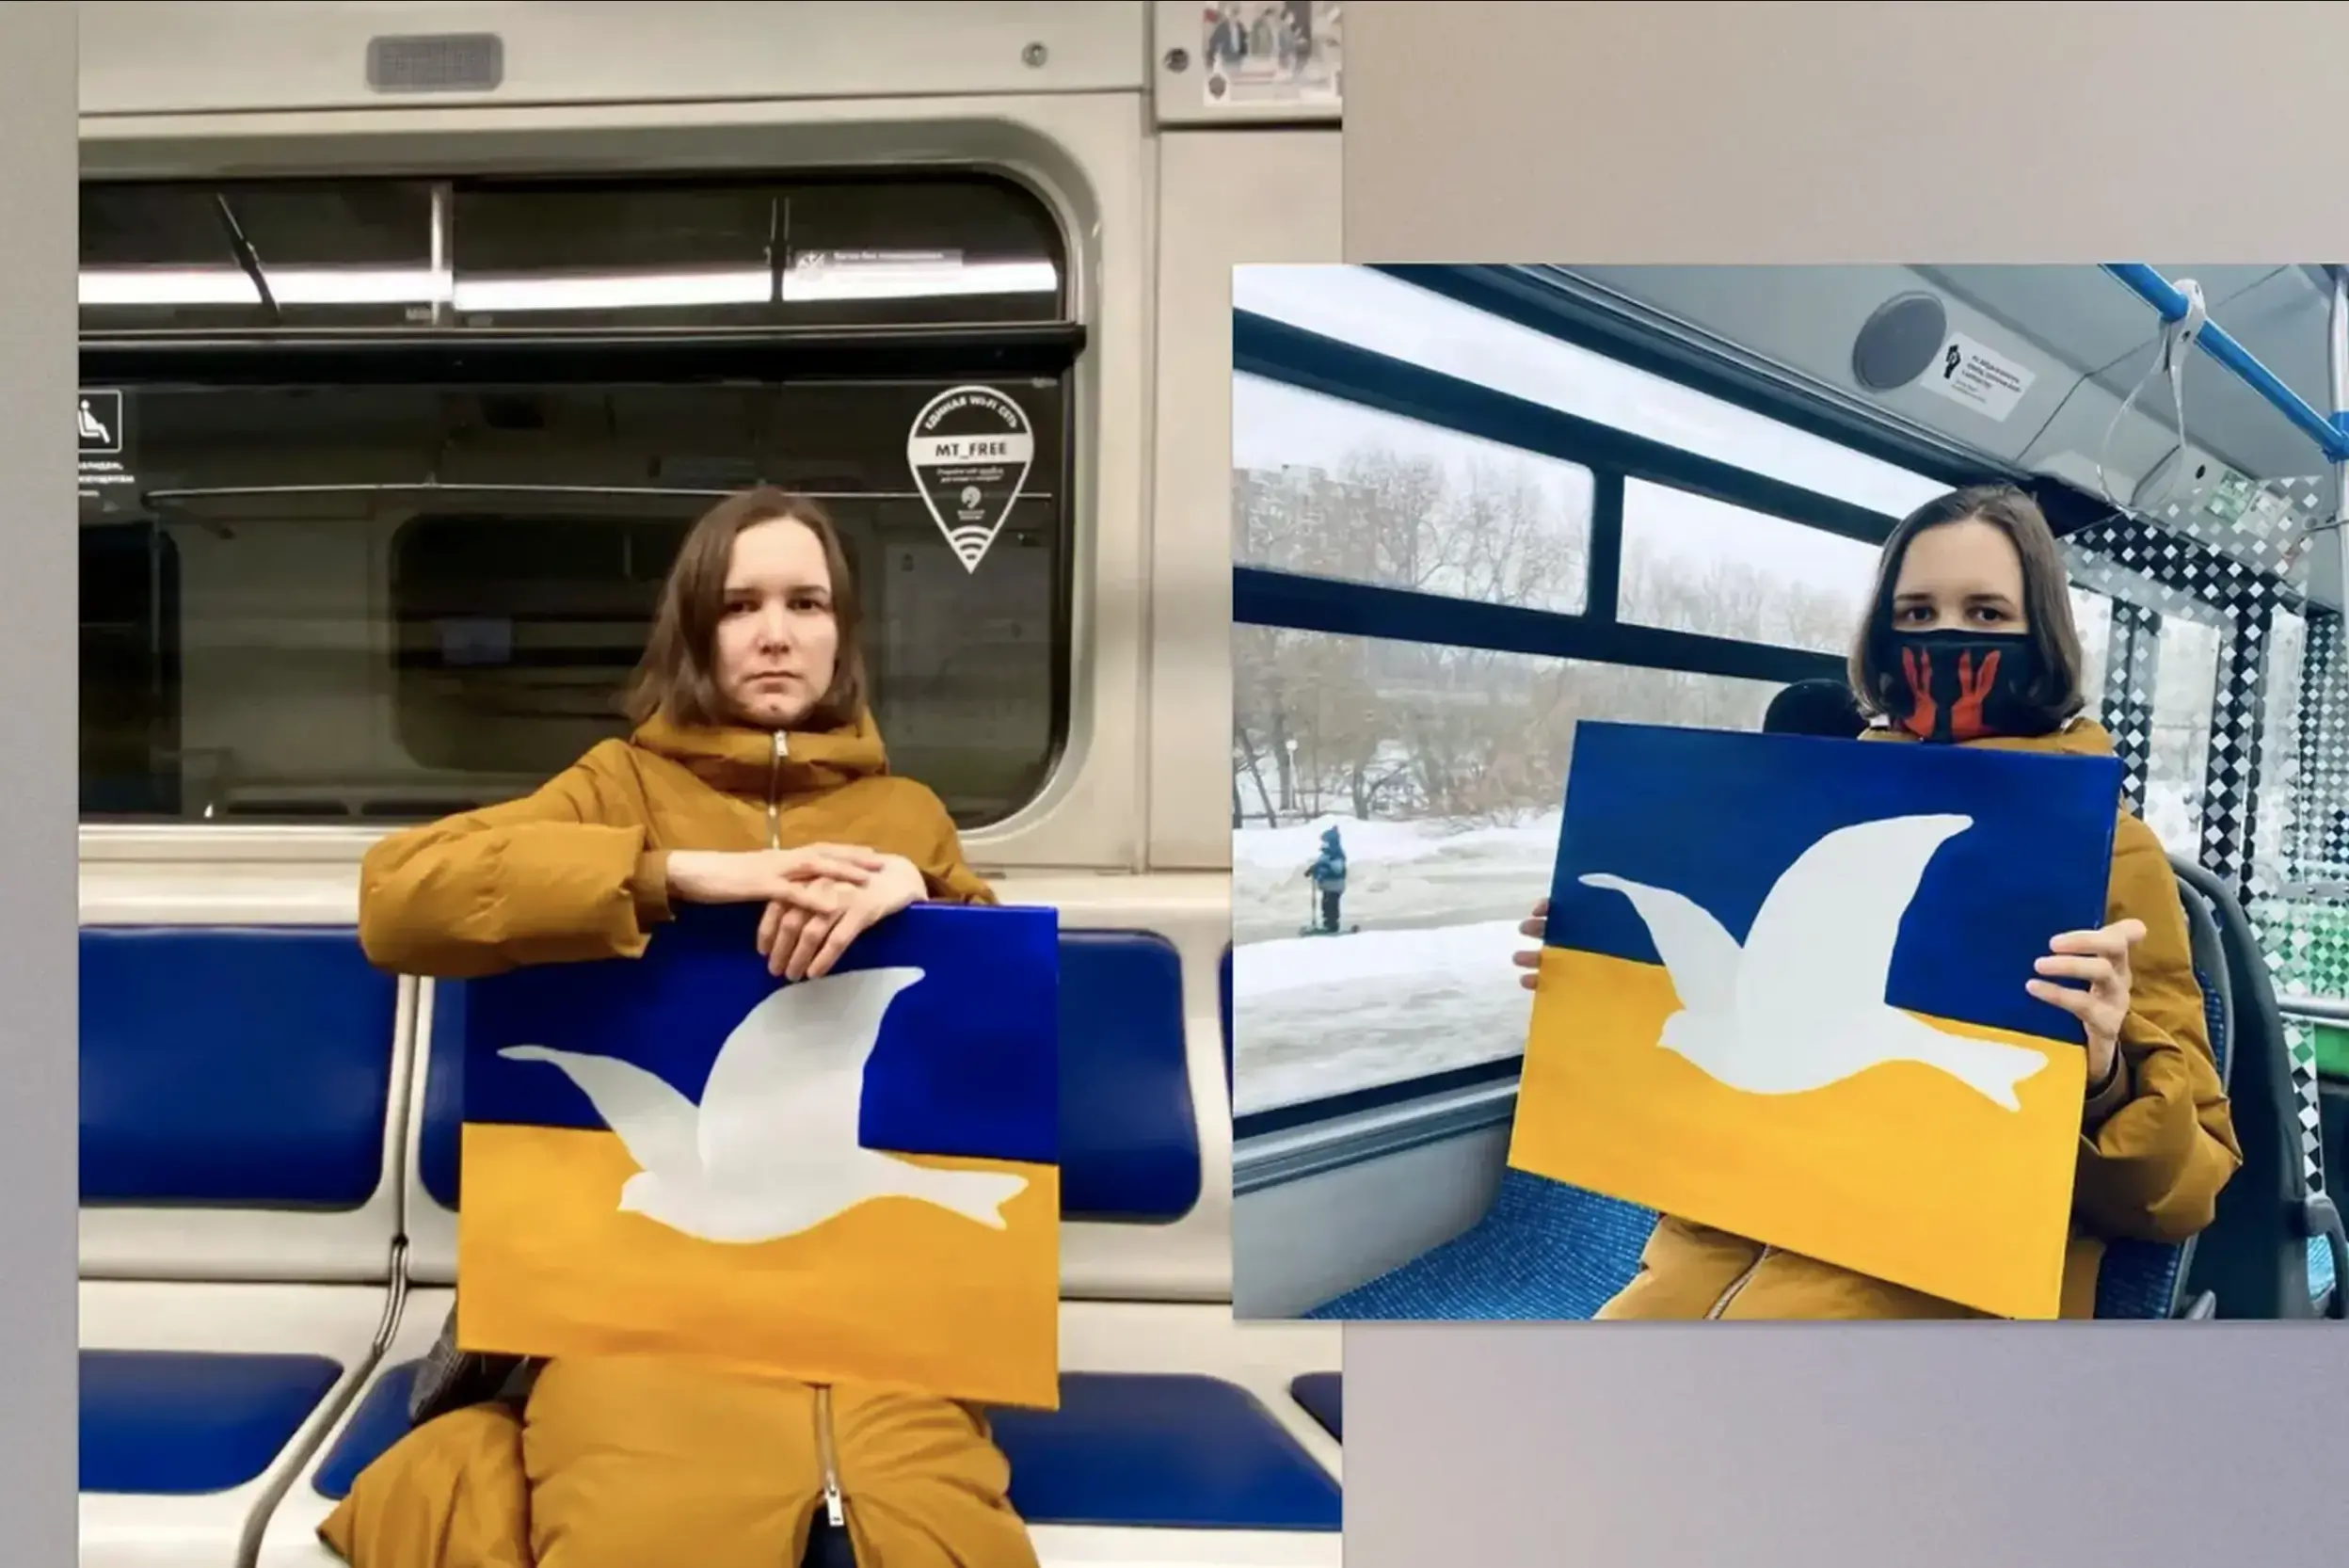 Holding a Ukraine flag on Russian public transit